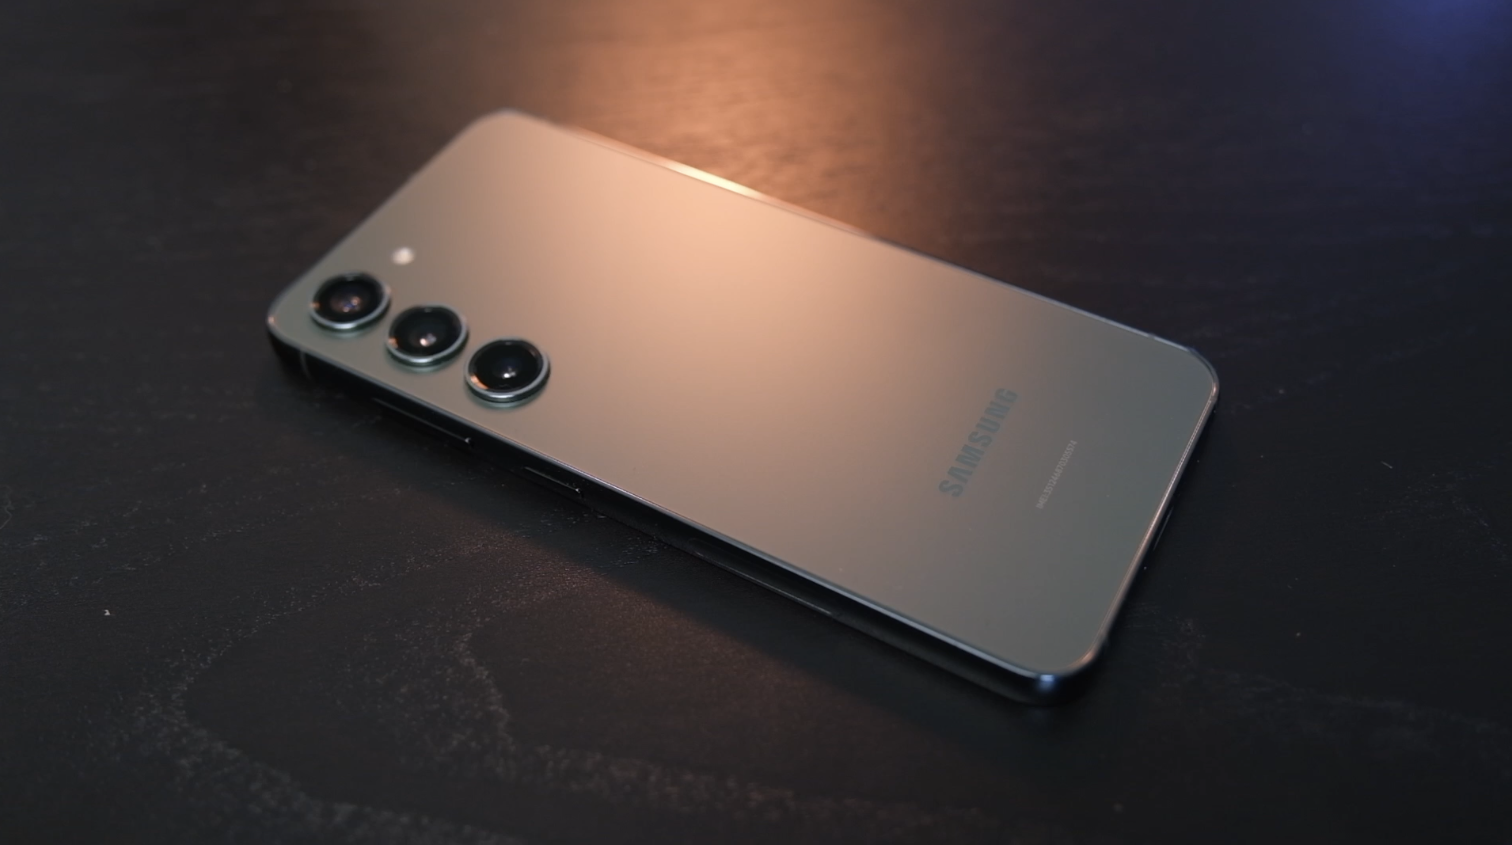 Samsung Galaxy S23 Review: The Galaxy To Get! — Sypnotix